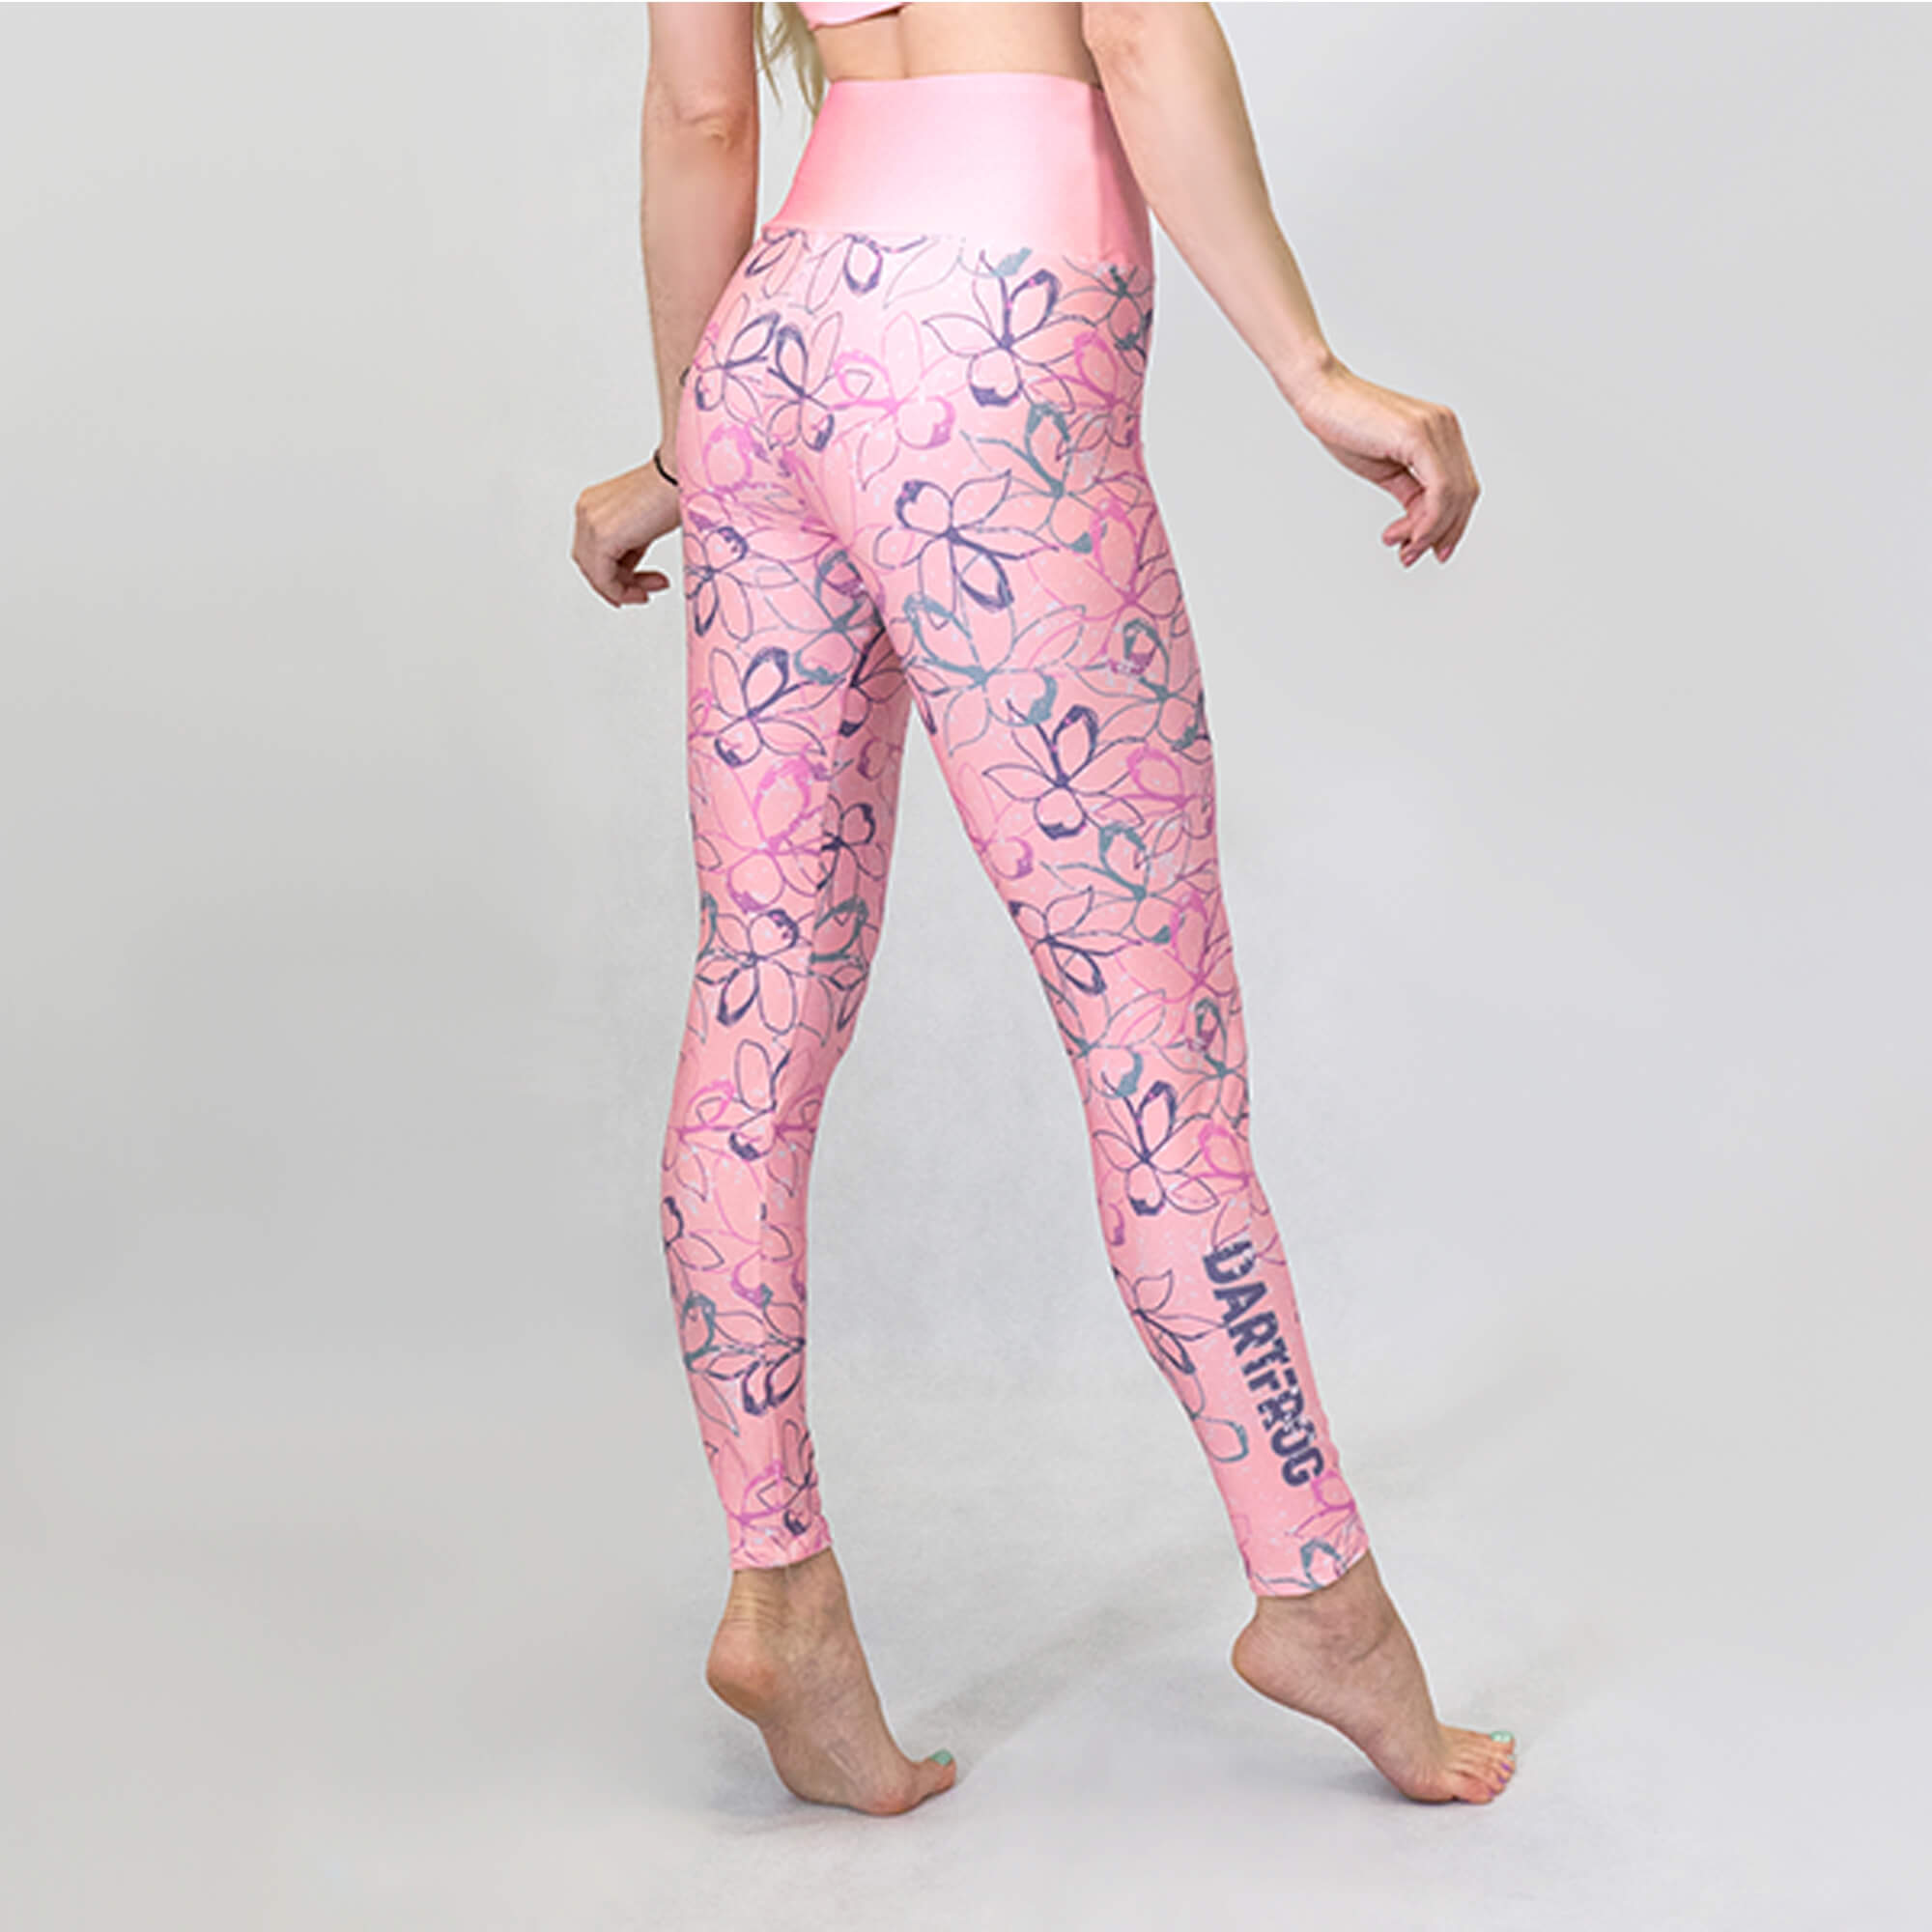 Buy Better Bodies High waist leggings - Hot Pink | Nelly.com